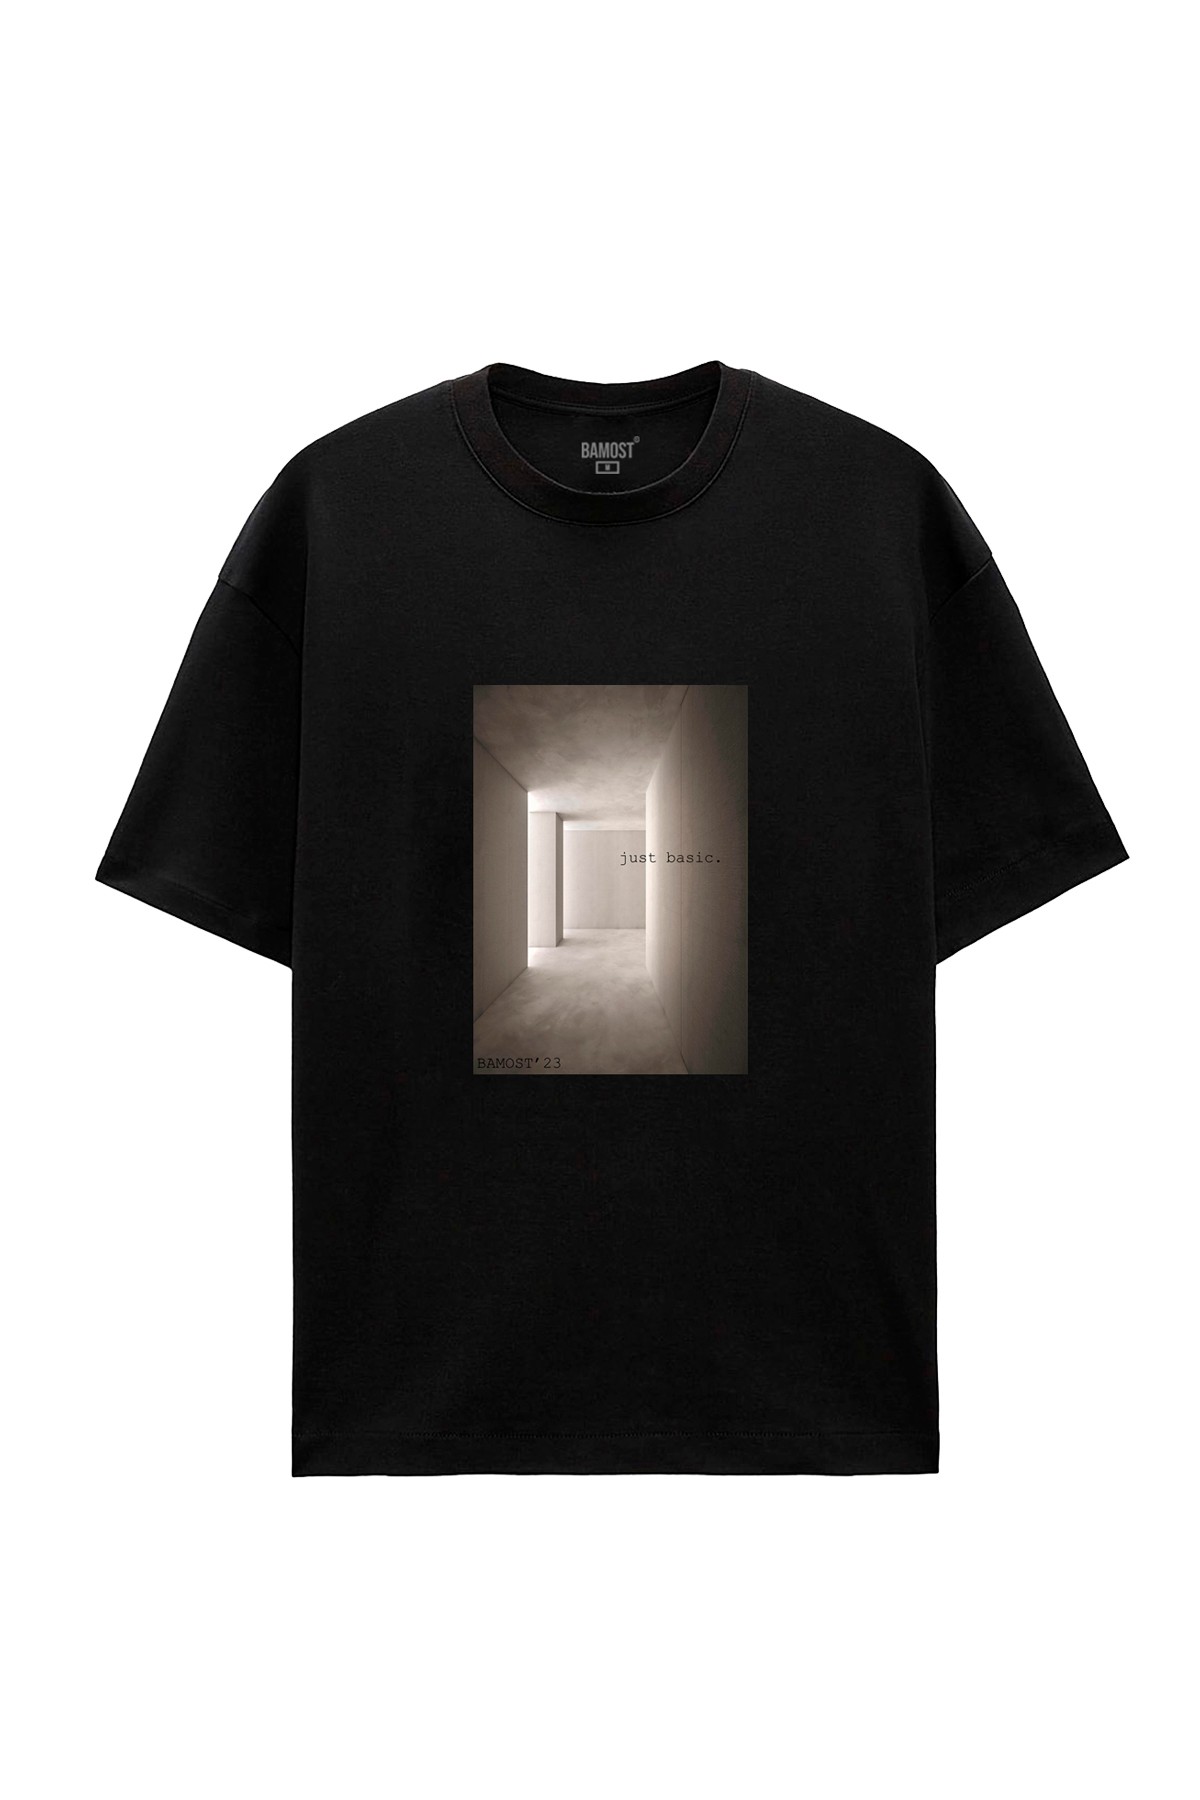 Perspective'5 - Unisex Oversize T-Shirt - BLACK